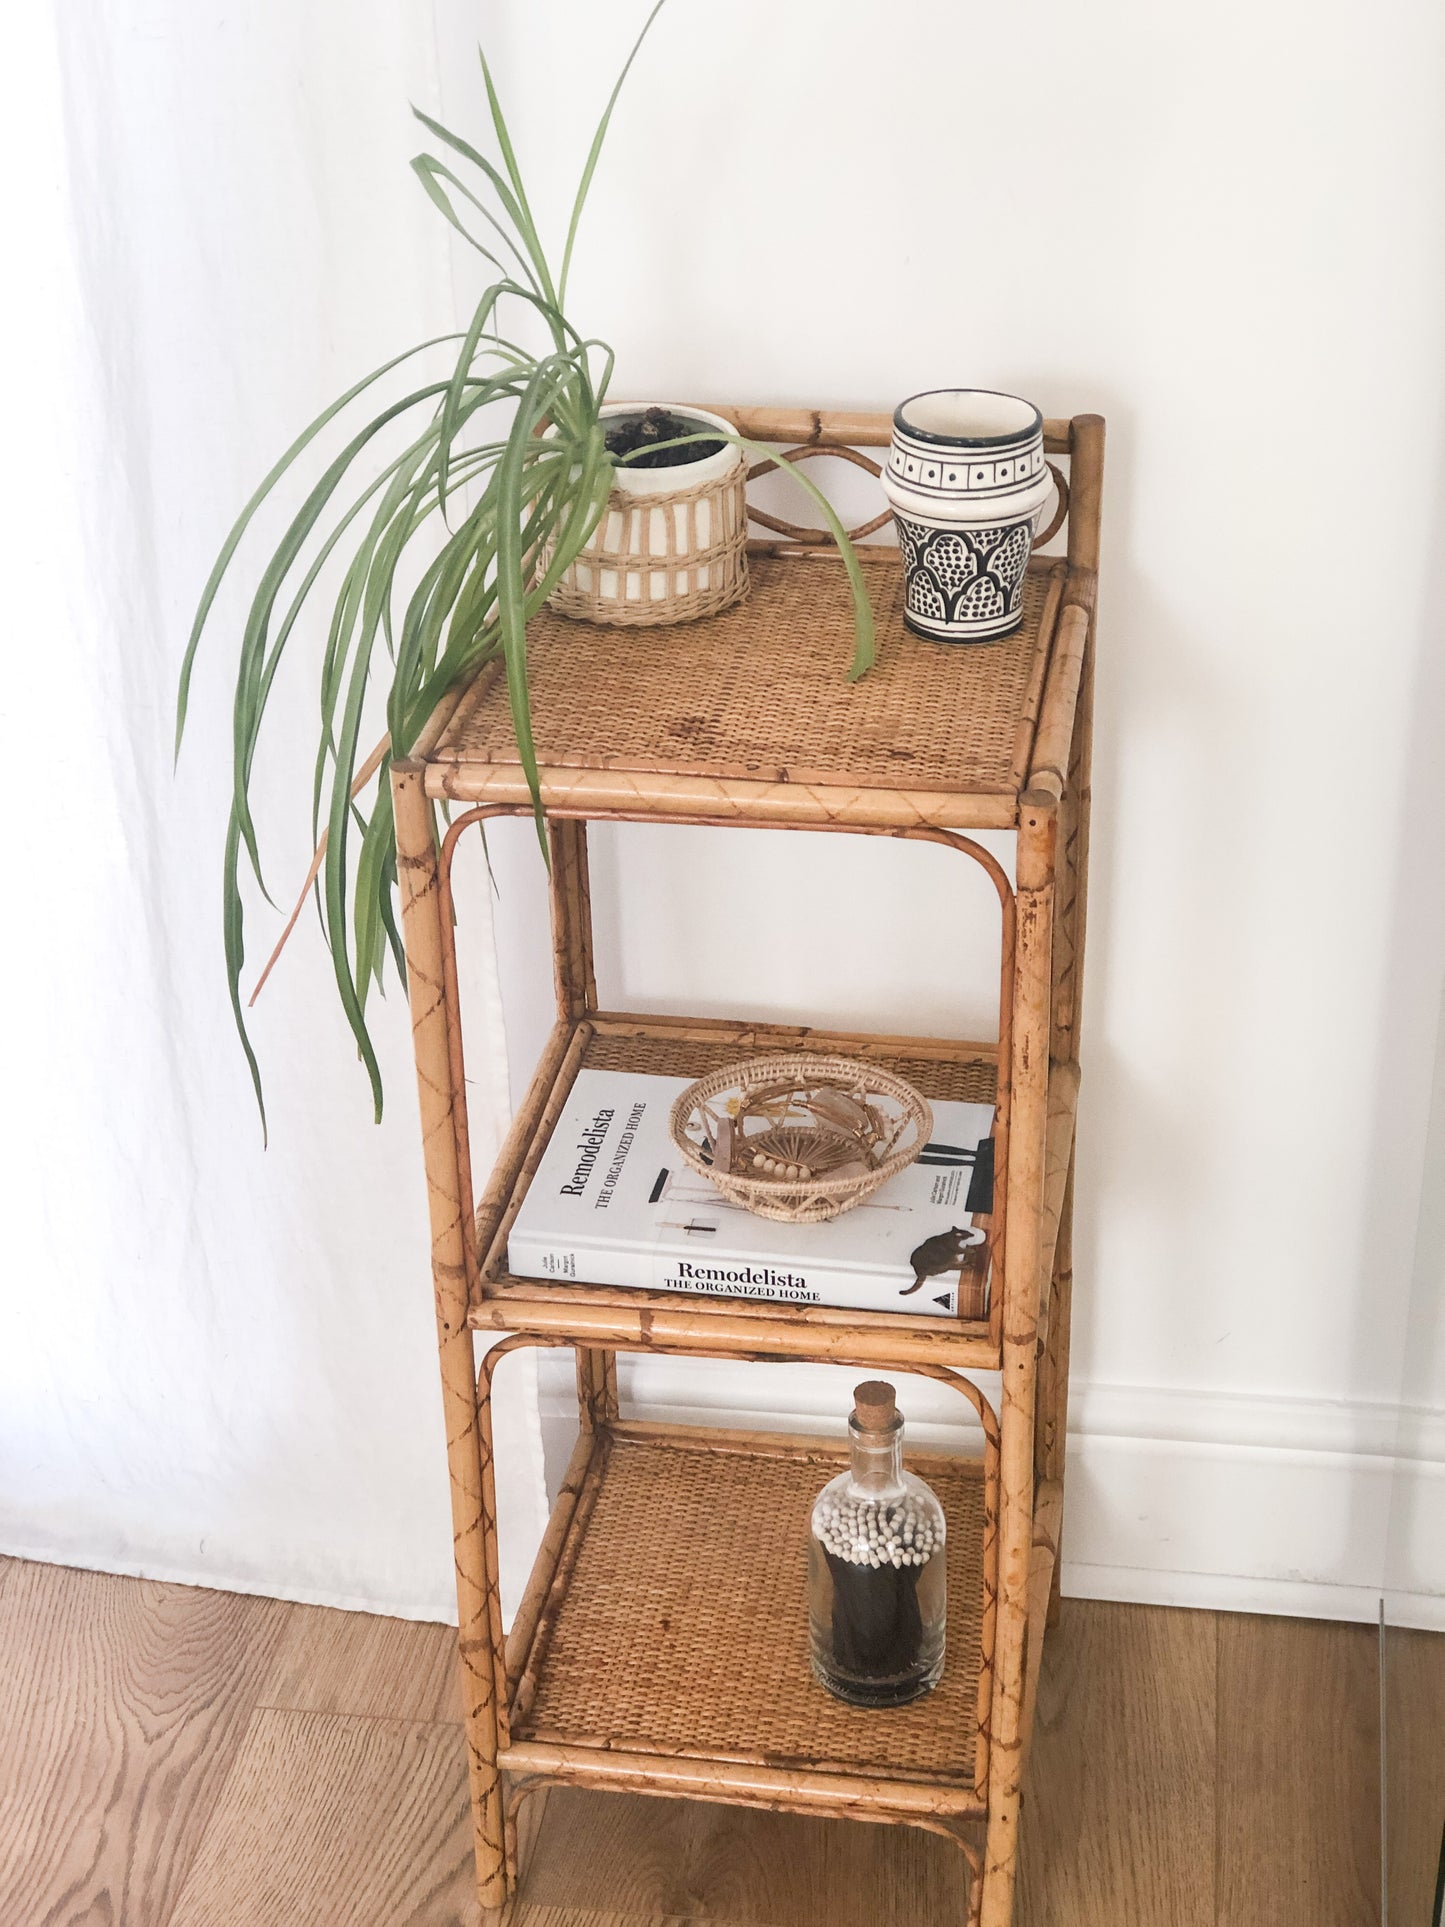 Vintage Cane & Bamboo 3 Tier Shelf Unit